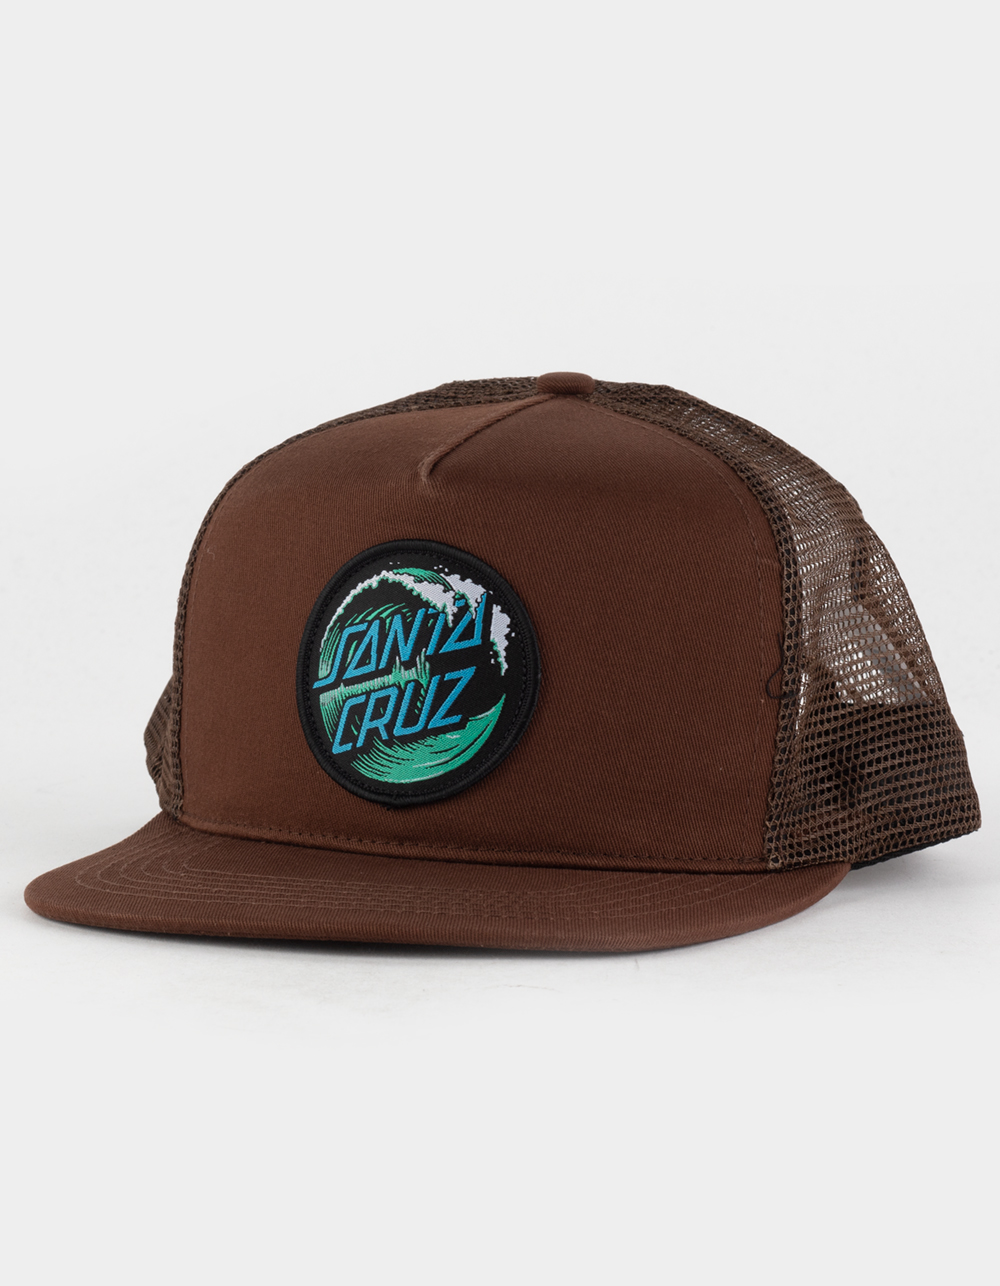 Santa Cruz Wave Dot Patch Mesh Trucker Hat - Brown - One Size